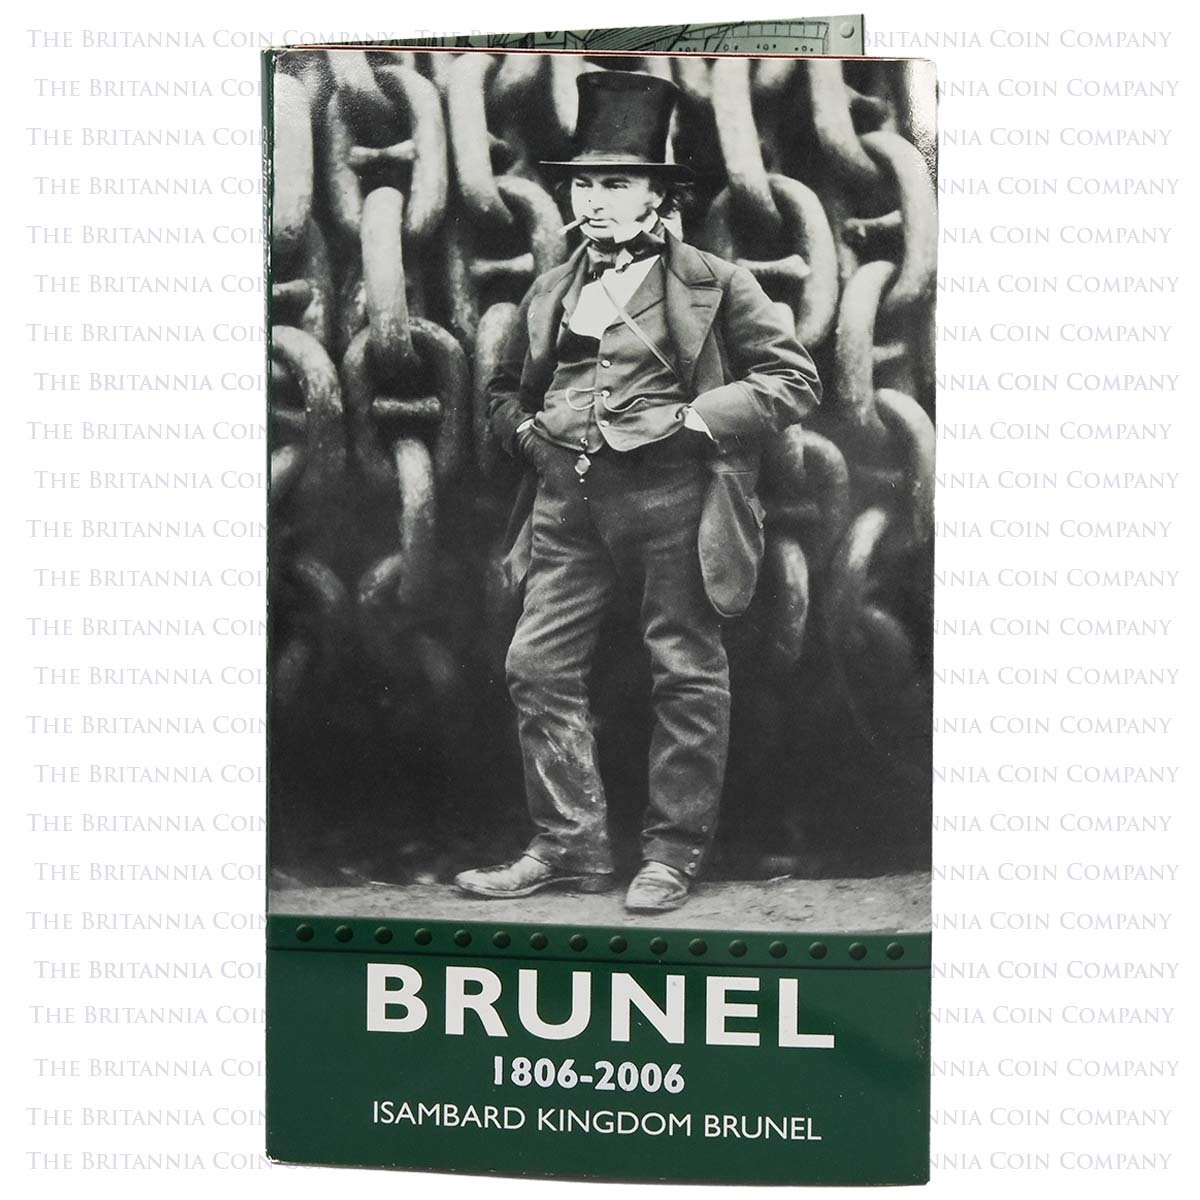 2006 Isambard Kingdom Brunel 200th Birthday Set £2 Brilliant Uncirculated In Folder Packaging